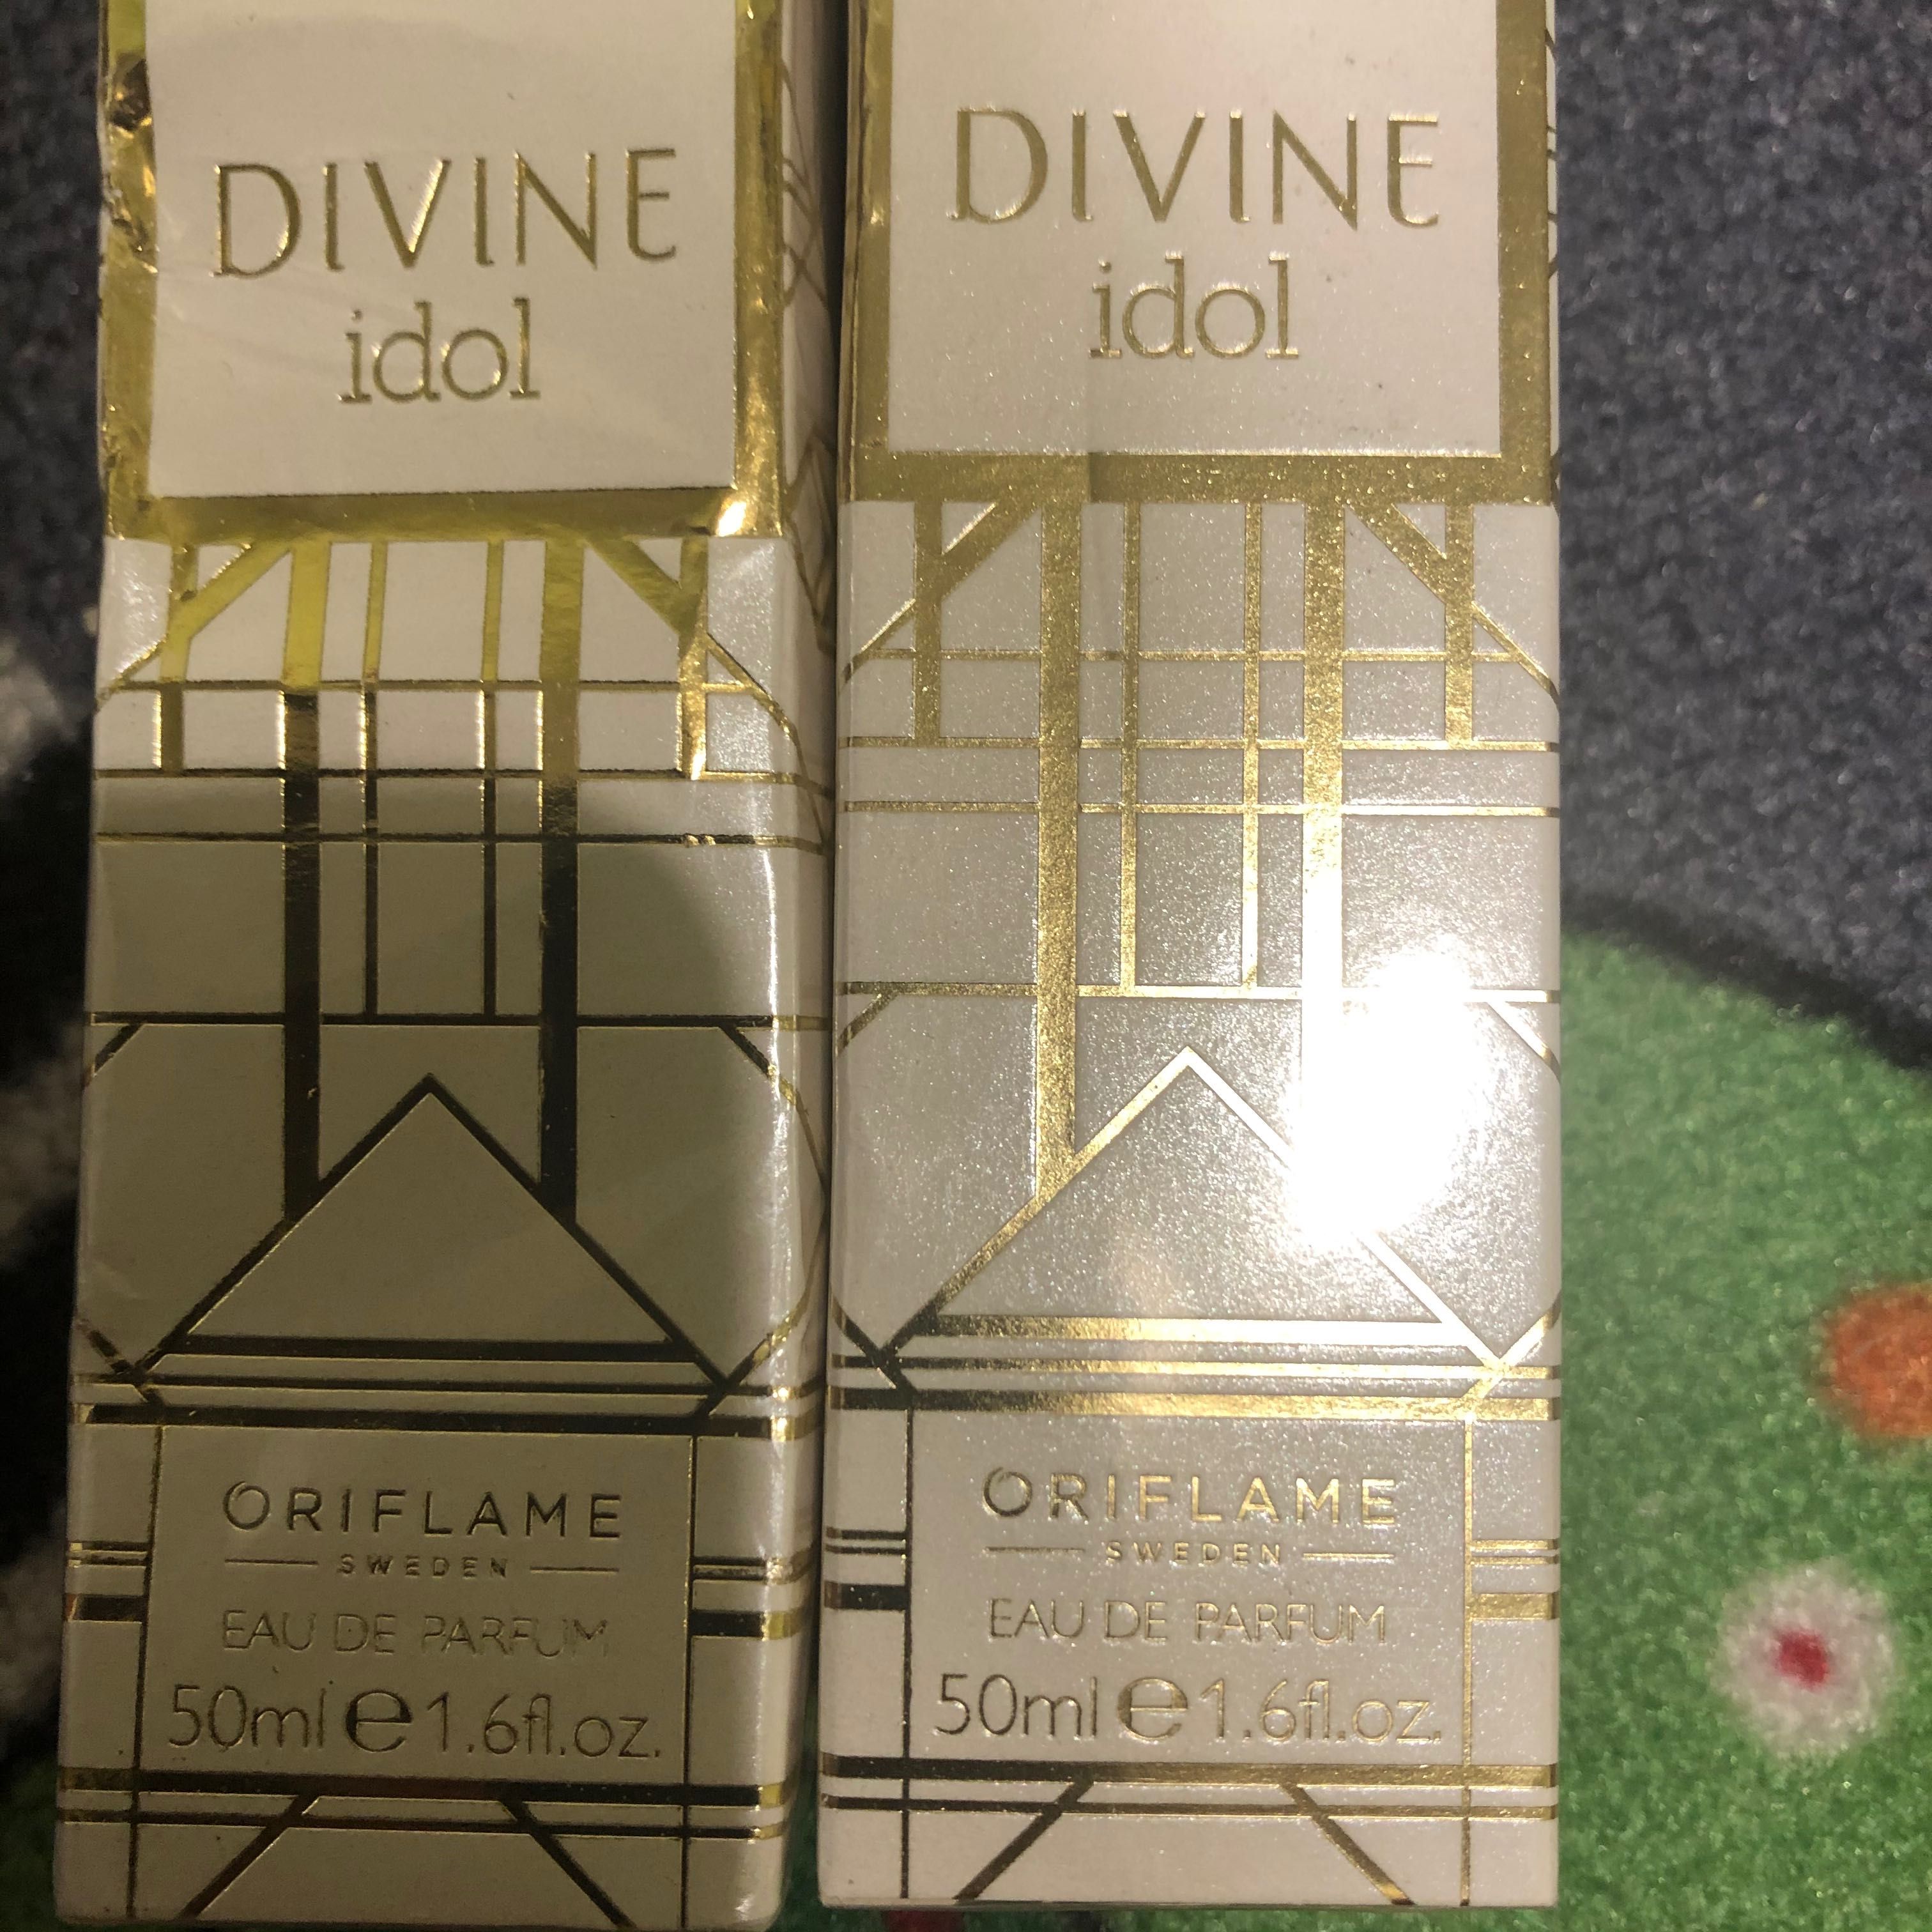 Woda perfumowa Divine Idol, 50ml, cena 130,00